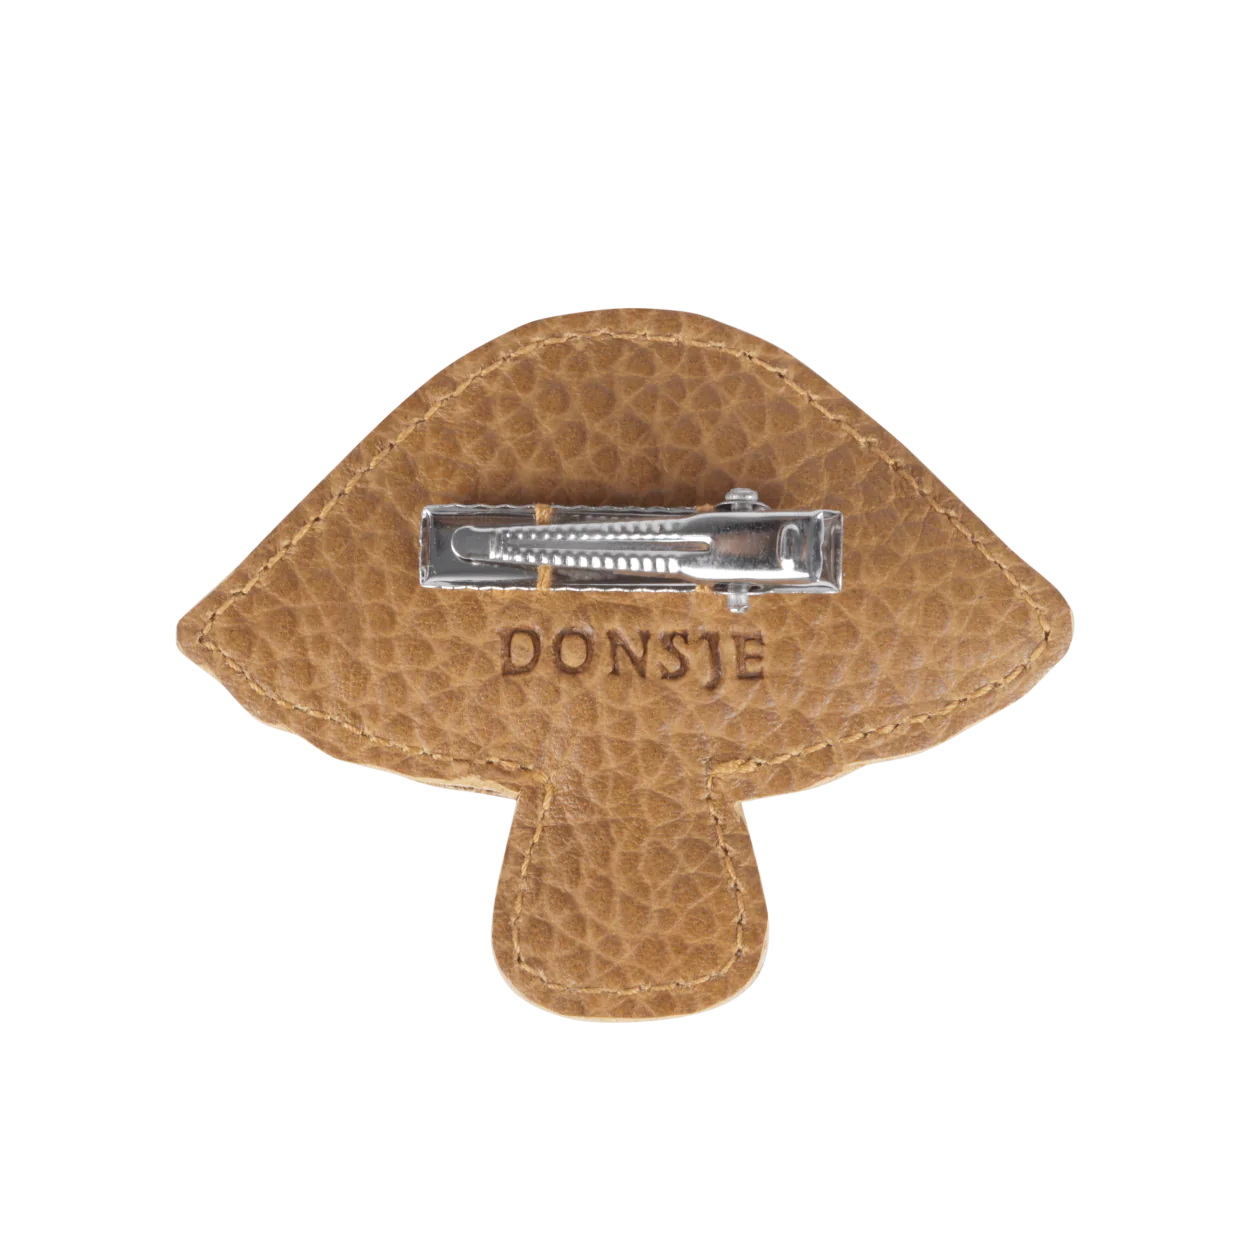 Forest Clip | Mushroom -Toast Grain Leather